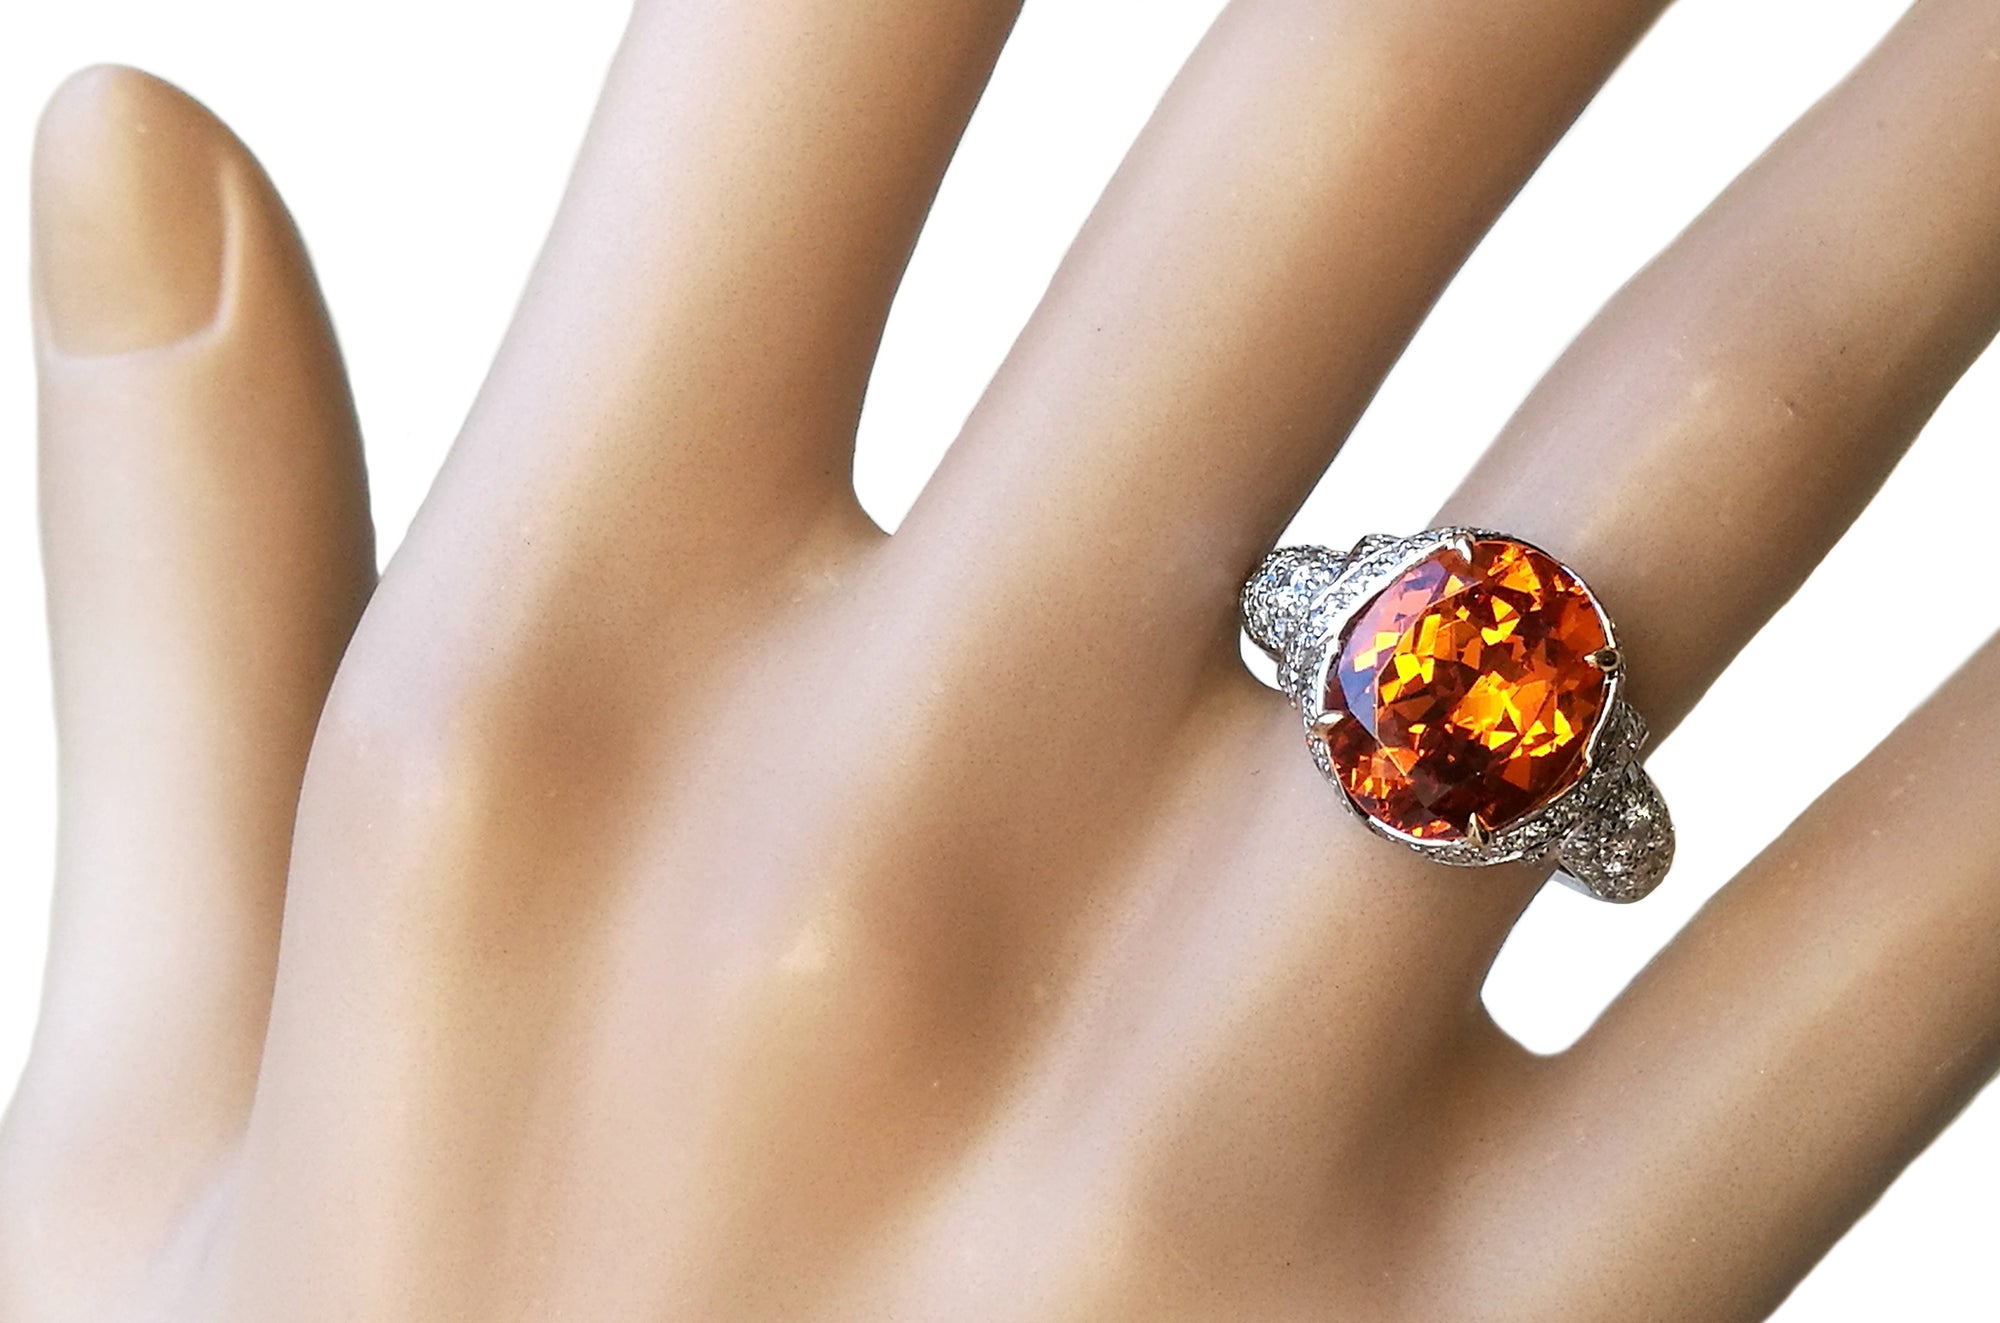 Tiffany & Co. Schlumberger 6.71ct Spessartite Garnet & Diamond Pave Ring in Platinum